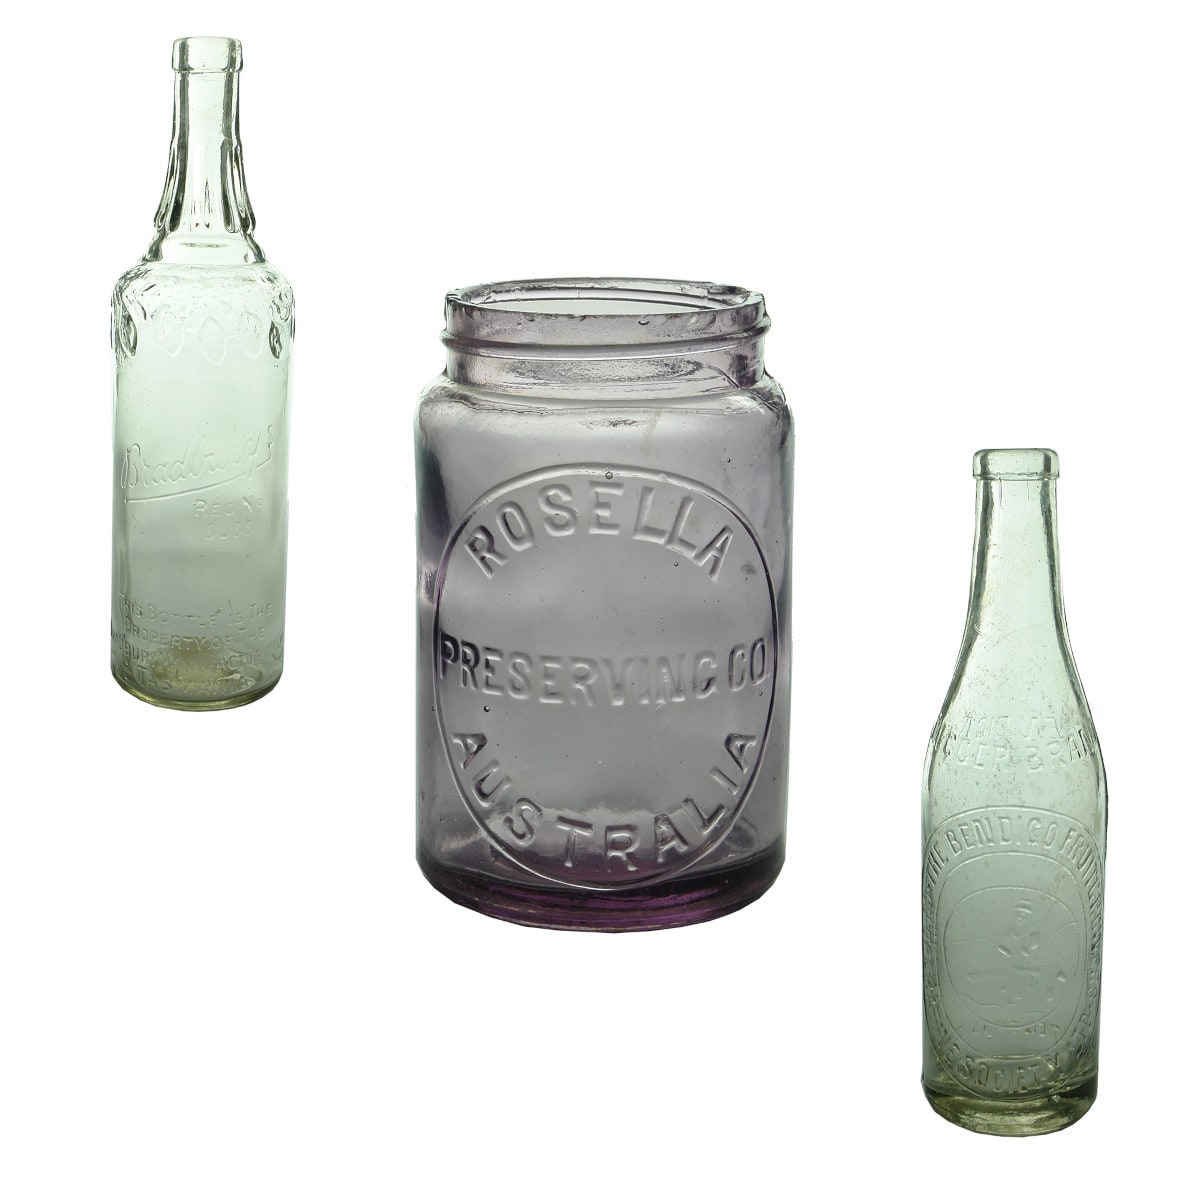 3 Household Bottles: Bradburys, Tasmania cordial; Rosella Preserving Co jar; Digger Brand Bendigo sauce.